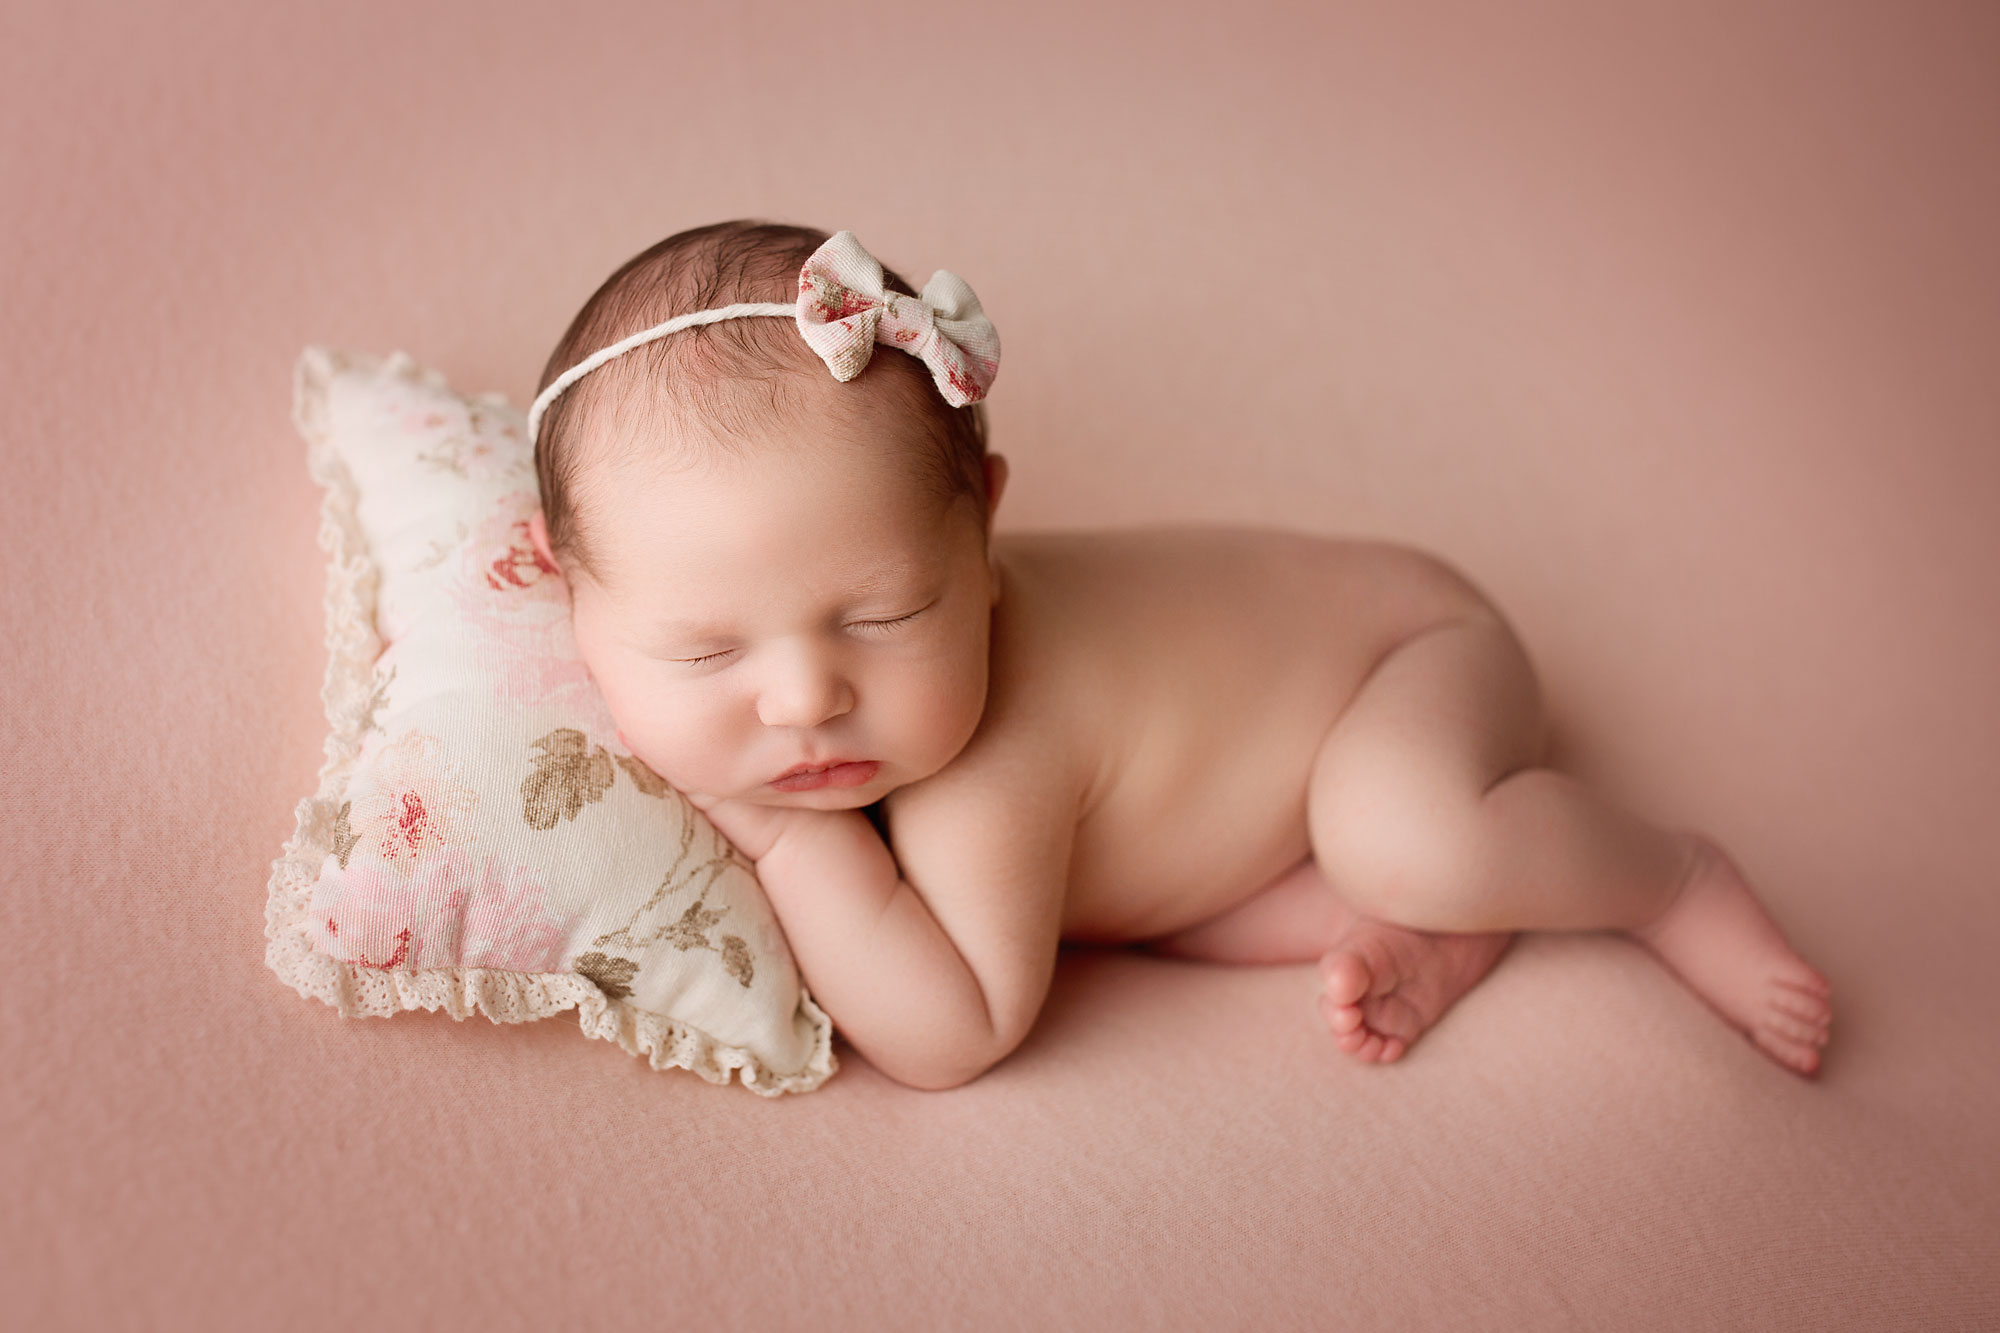 beautiful newborn photography nj, baby girl asleep on floral pillow with matching headband